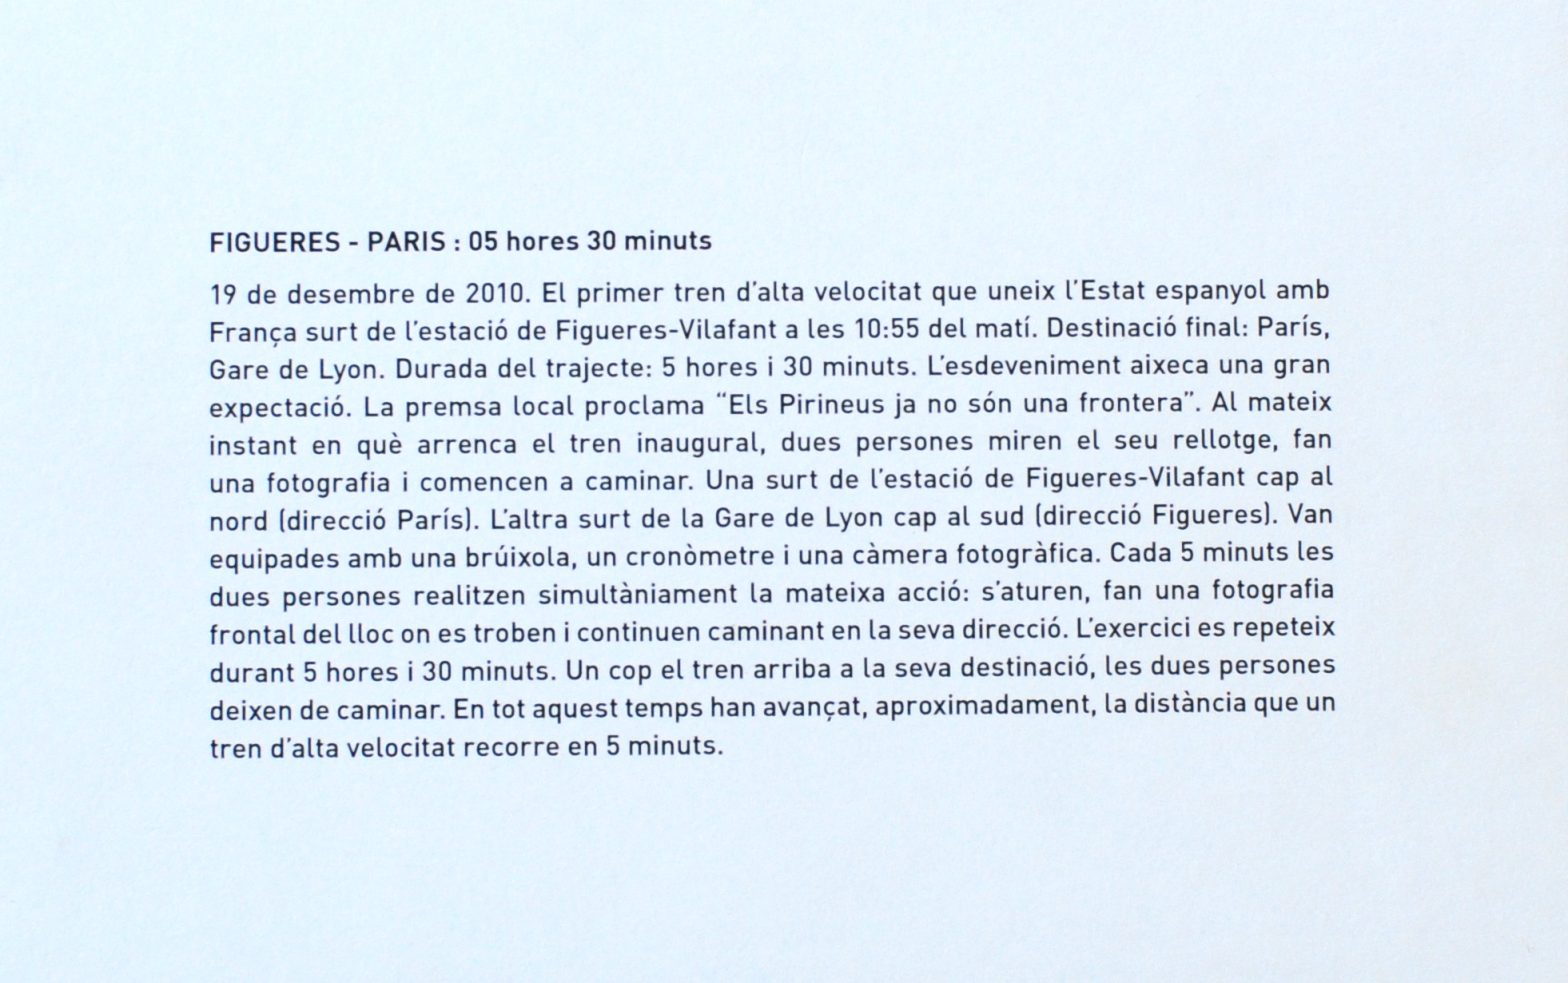 FIGUERES - PARIS- 5 hores 30 minuts, Pau Faus and Pere Grimau